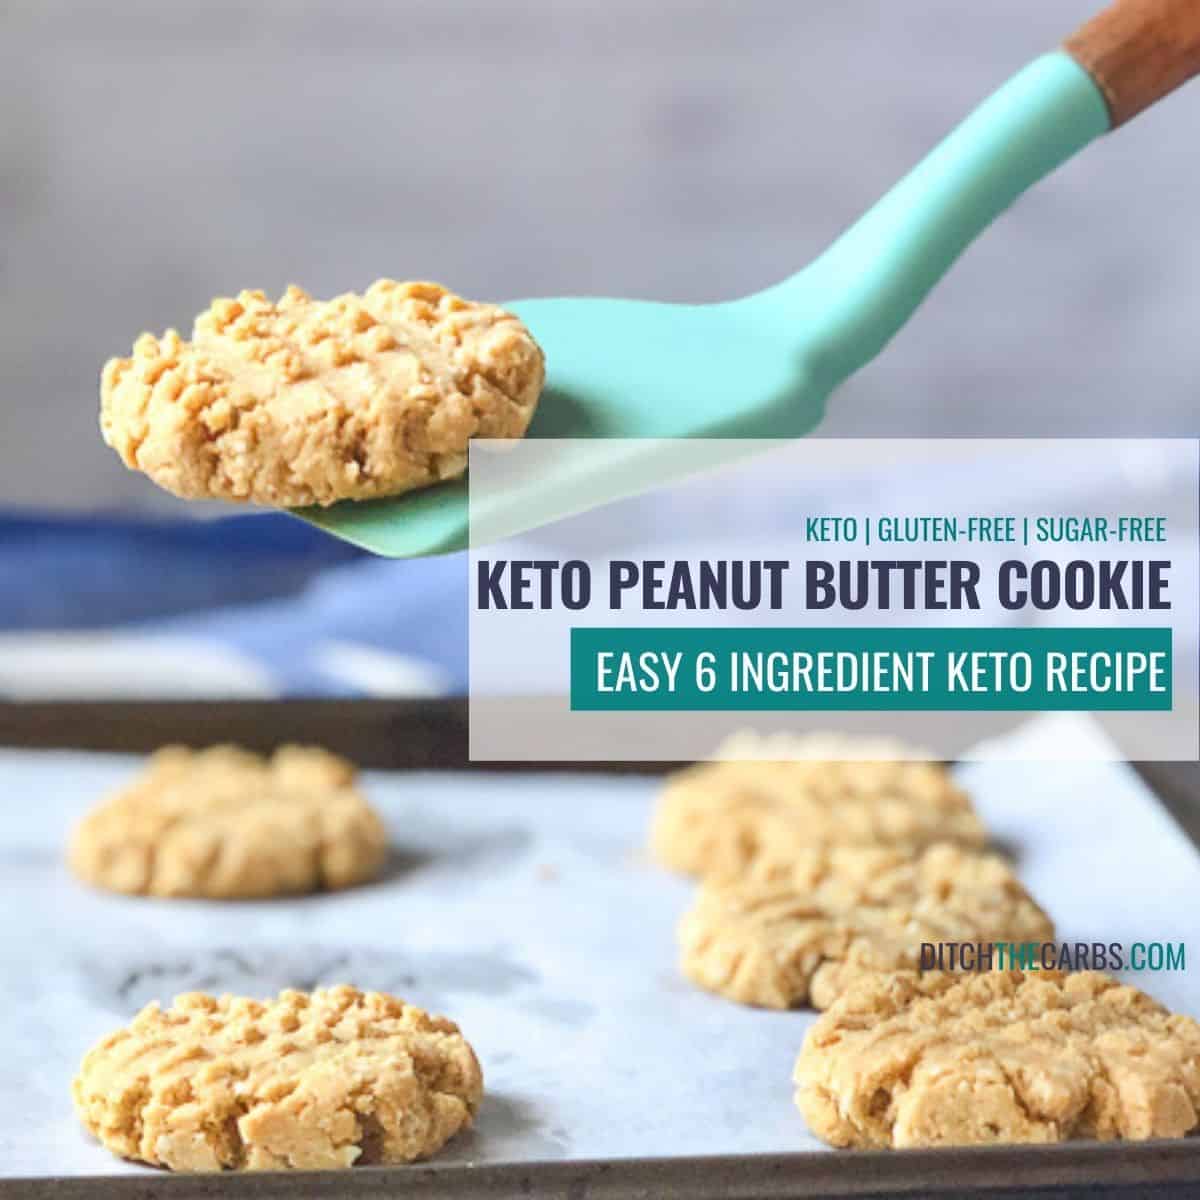 Amazing Keto Peanut Butter Cookies!